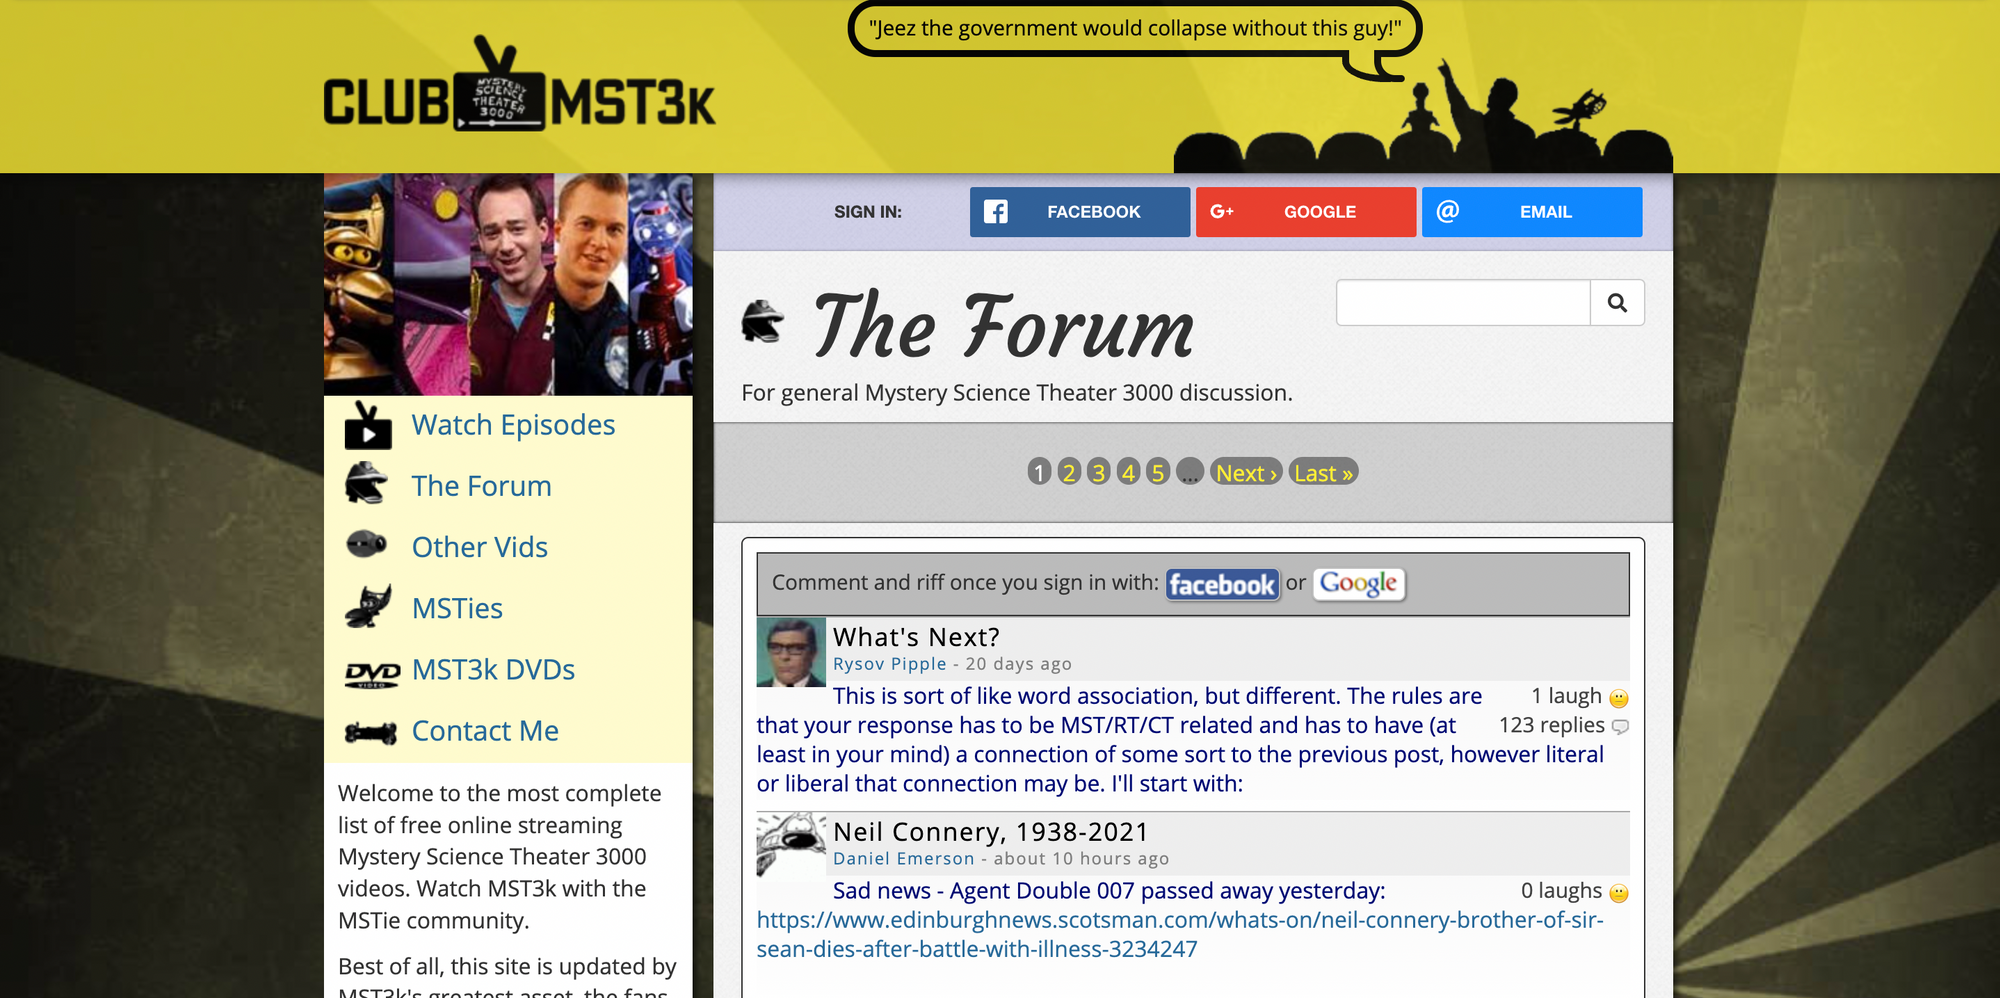 A screen capture of an old website